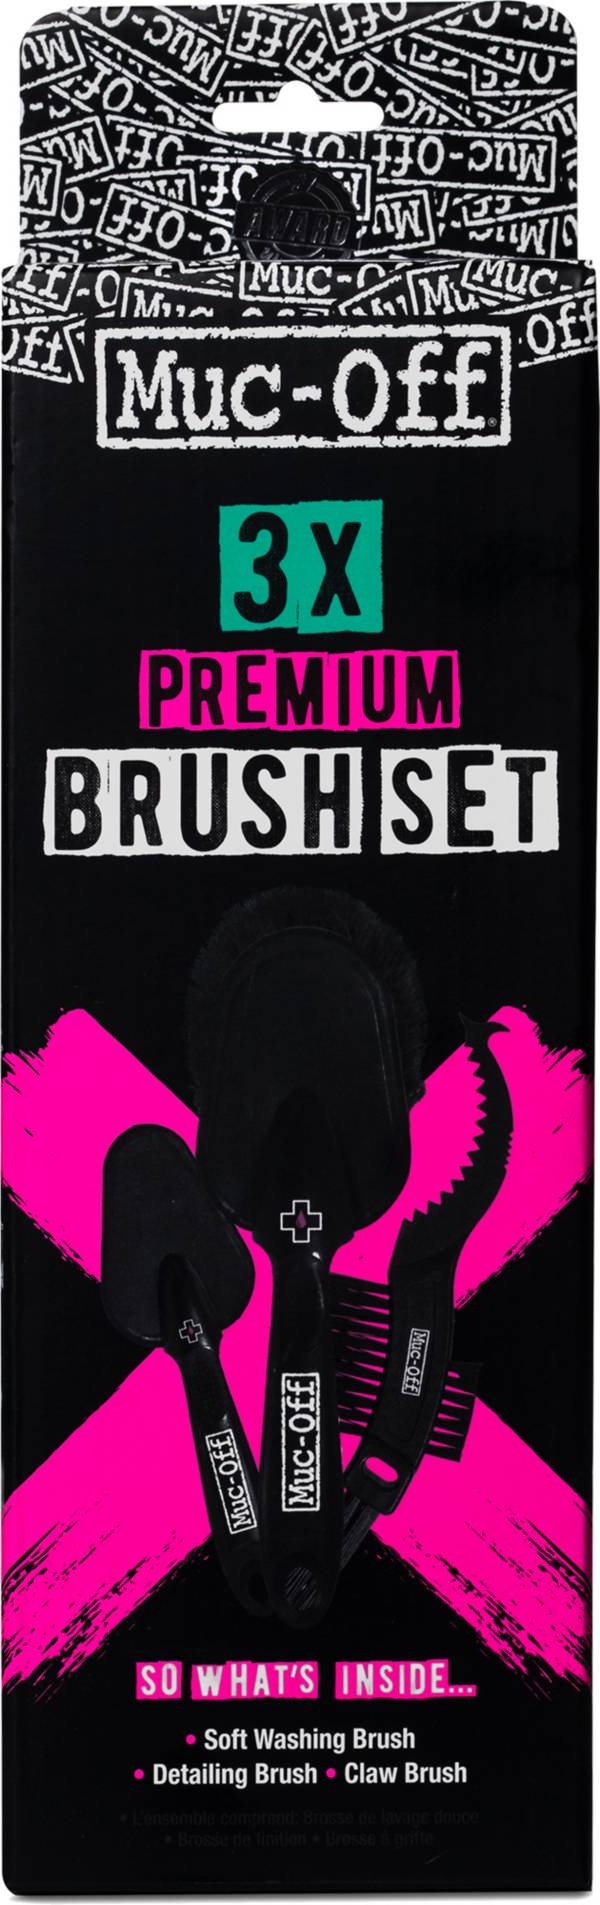 Muc-Off 3x Premium Brush Kit product image